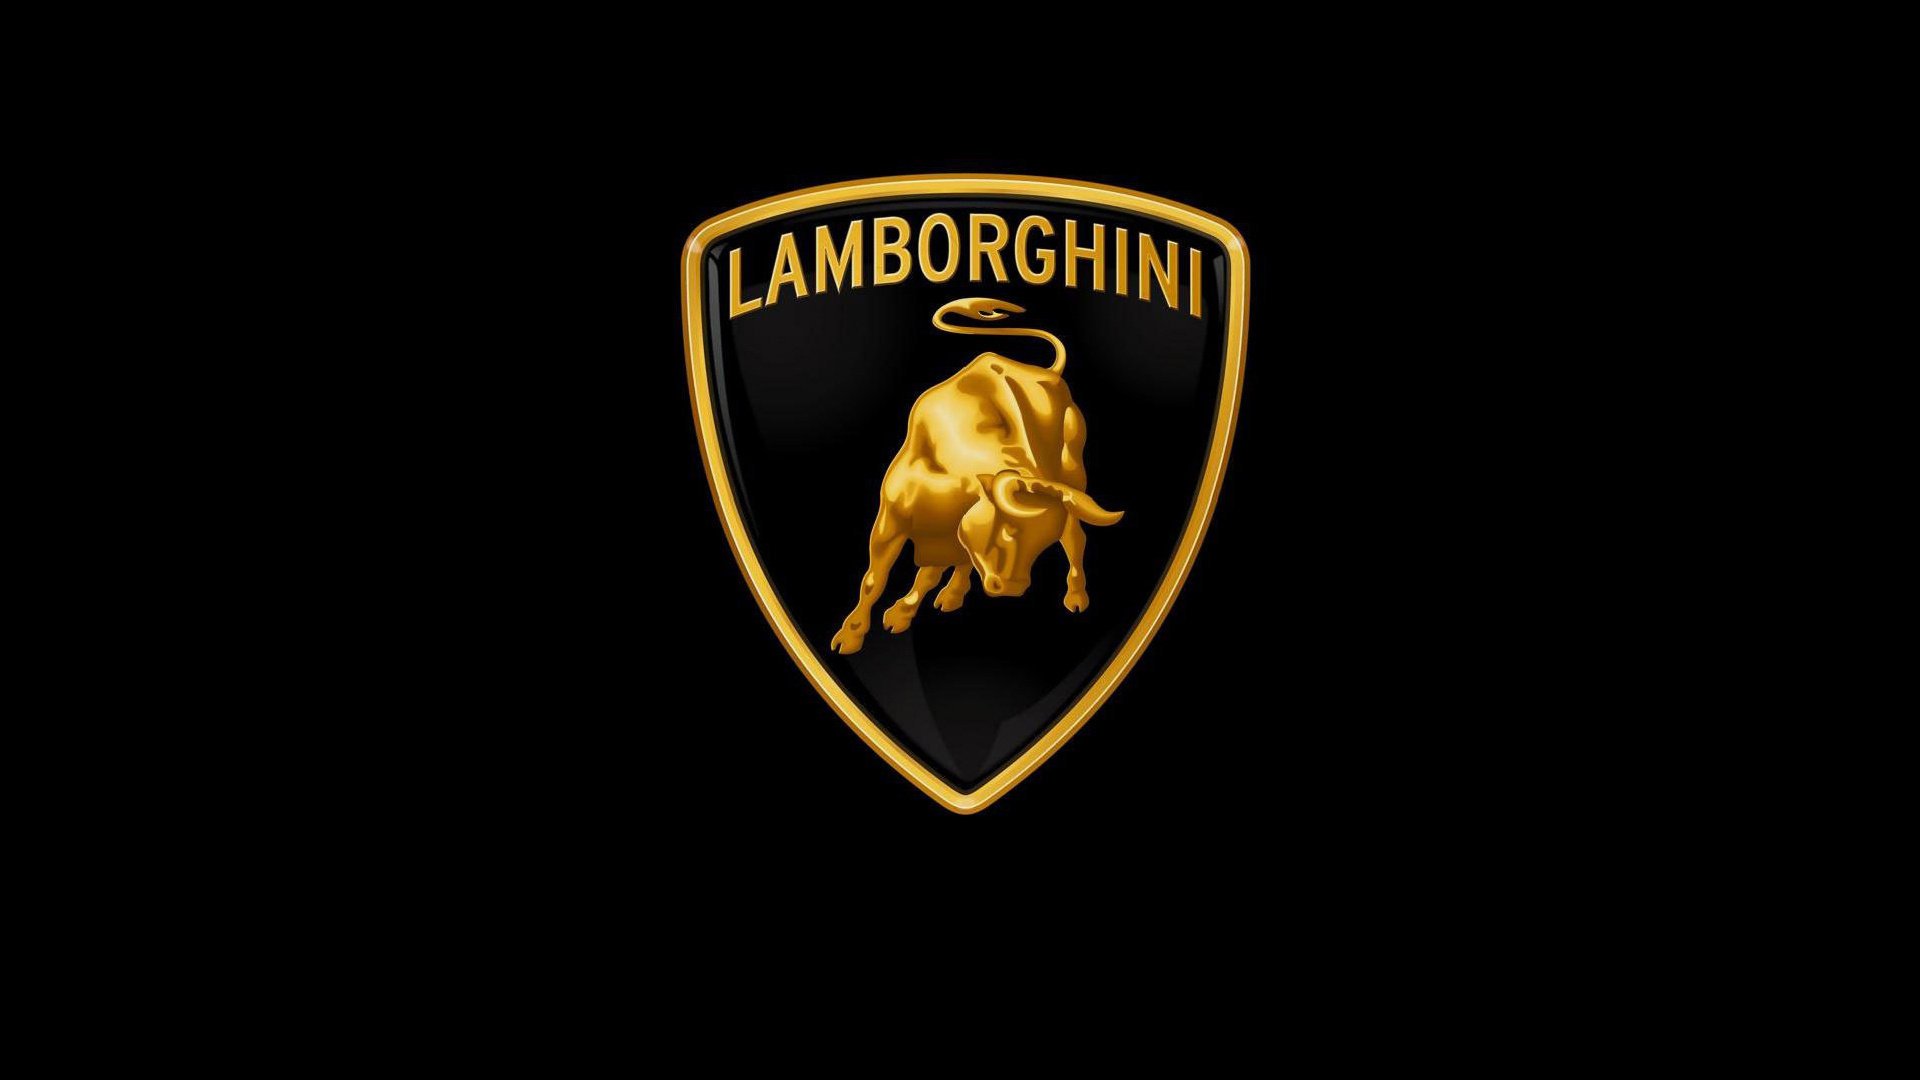 Эмблема Ламборджини на чёрном фоне